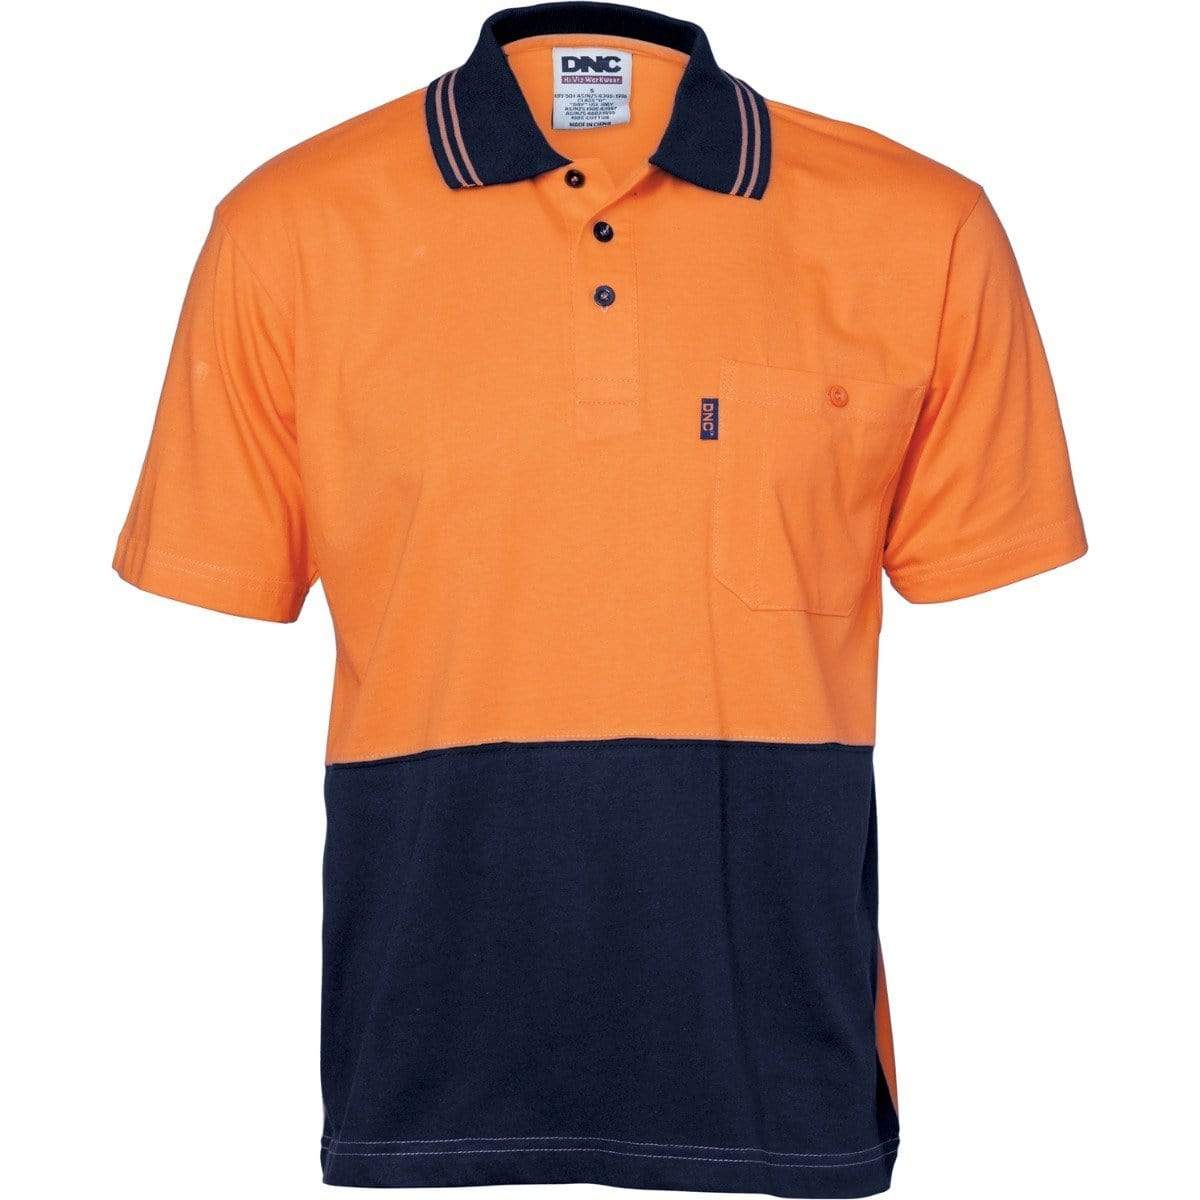 Dnc Workwear Hi-vis Cool-breeze Cotton Jersey Short Sleeve Polo Shirt With Underarm Cotton Mesh - 3845 Work Wear DNC Workwear Orange/Navy XS 